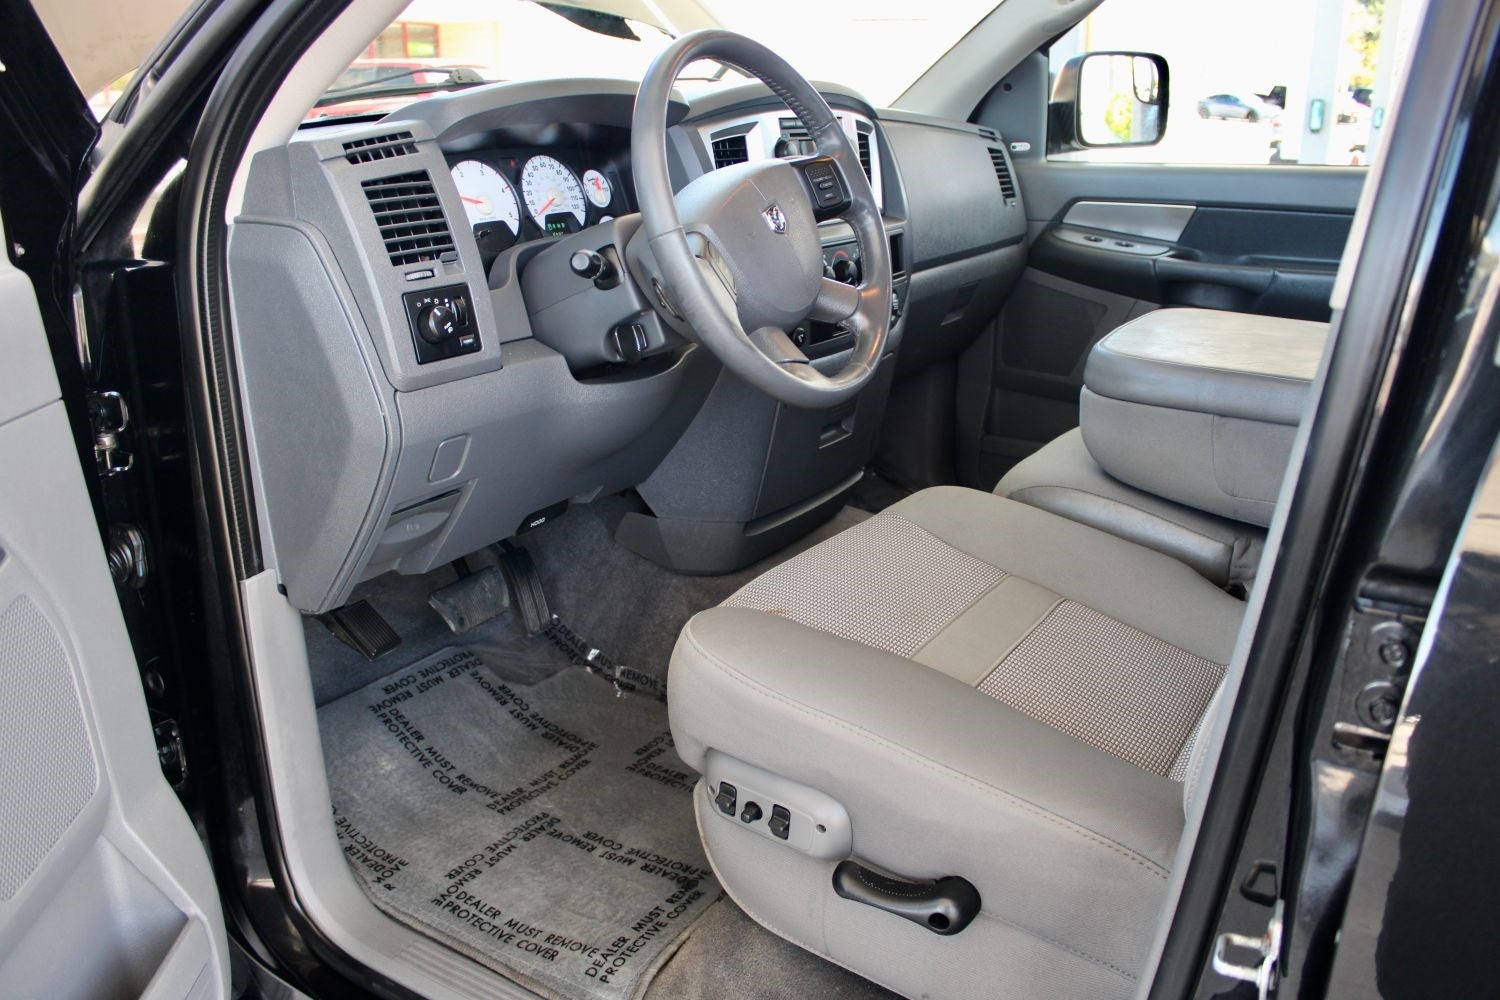 2008 Dodge Ram 2500 SLT Quad Cab 4WD